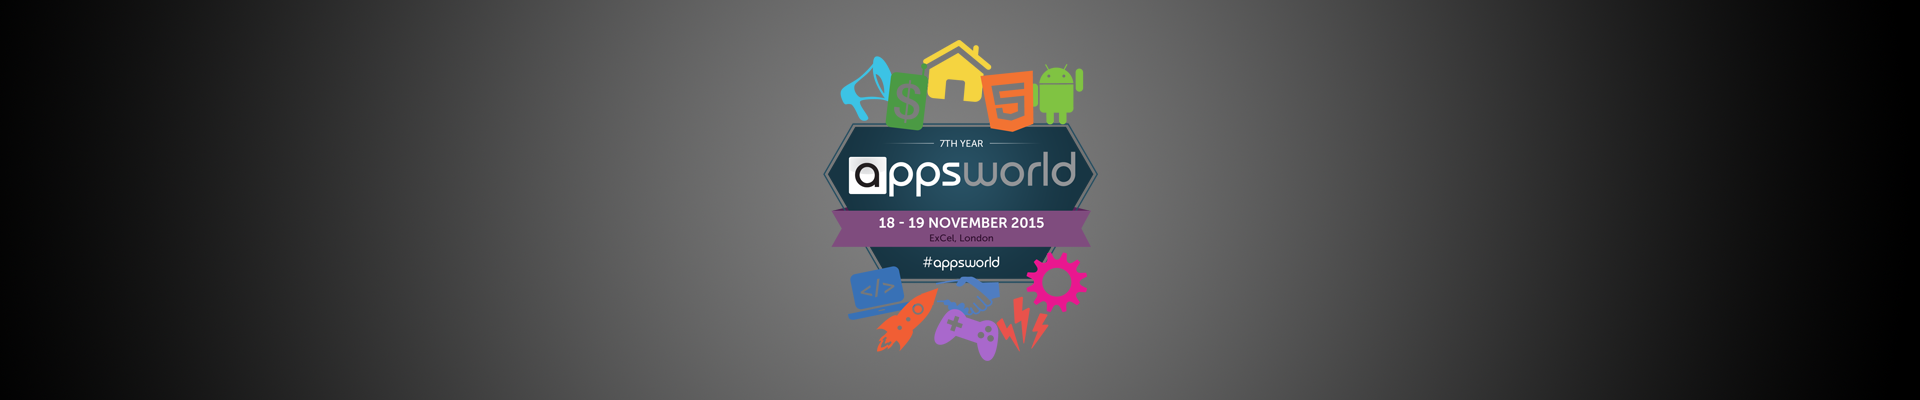 Apps world